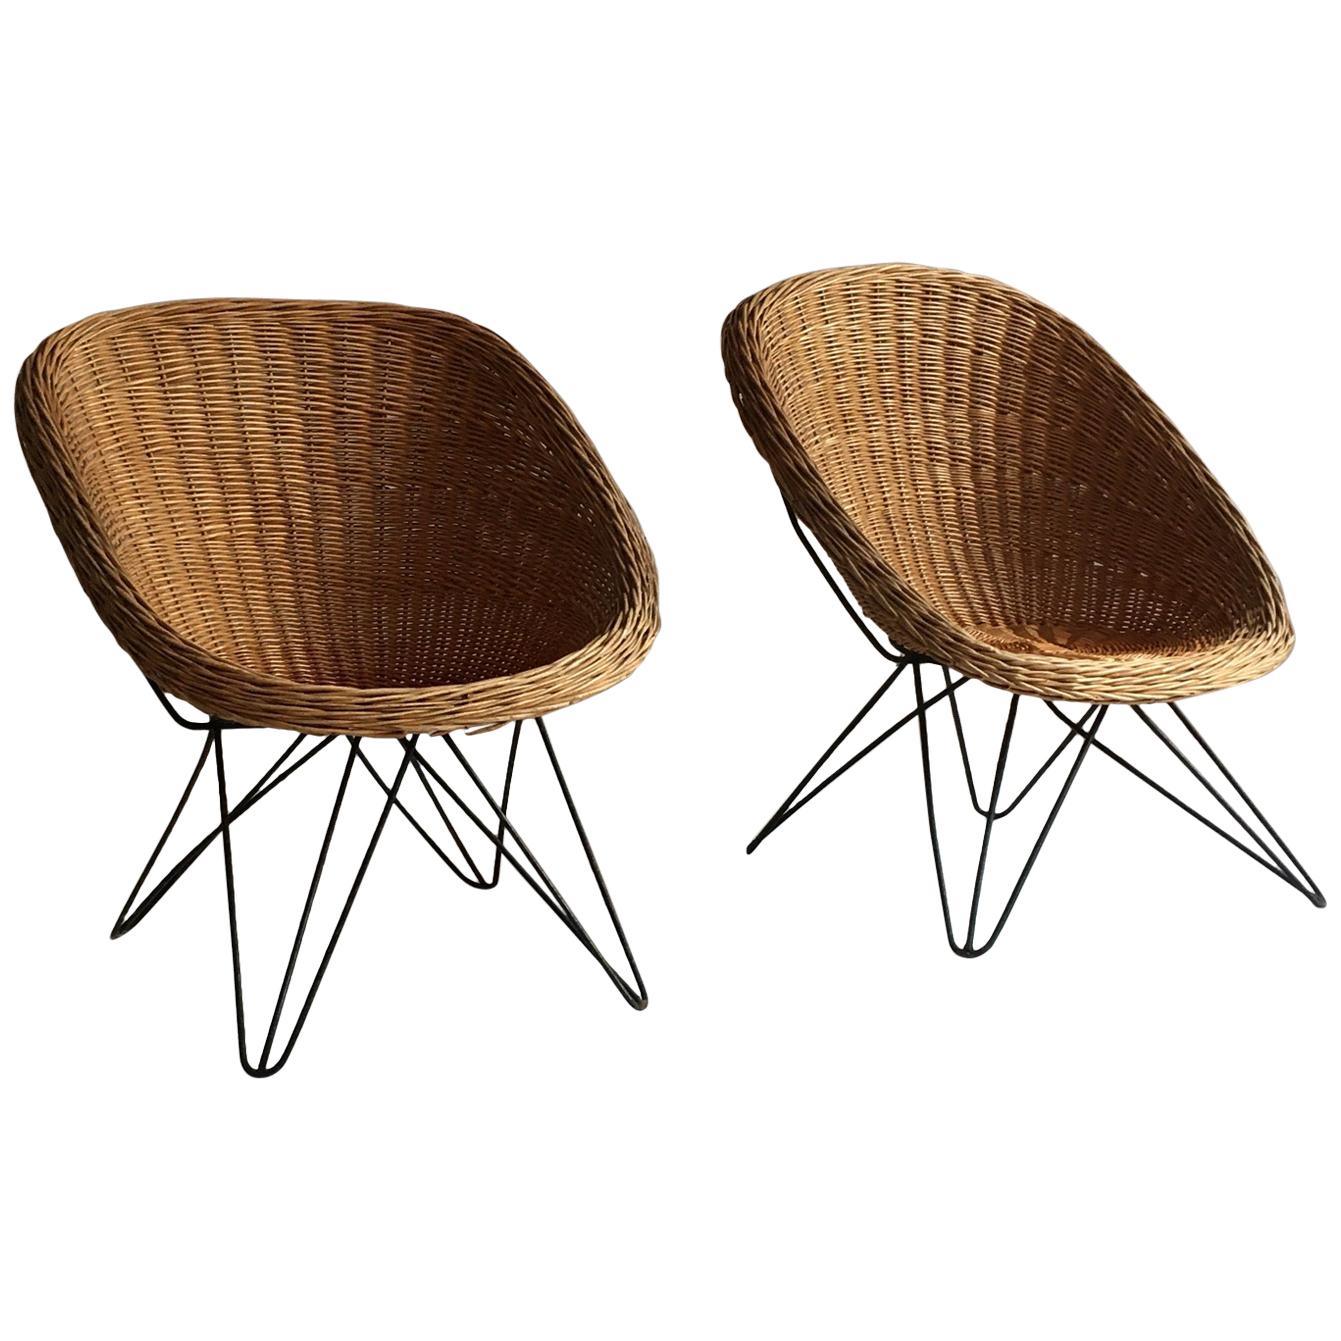 Mid-Century Modern Wicker Basket Chairs Hairpin Legs, Austria, 1950s